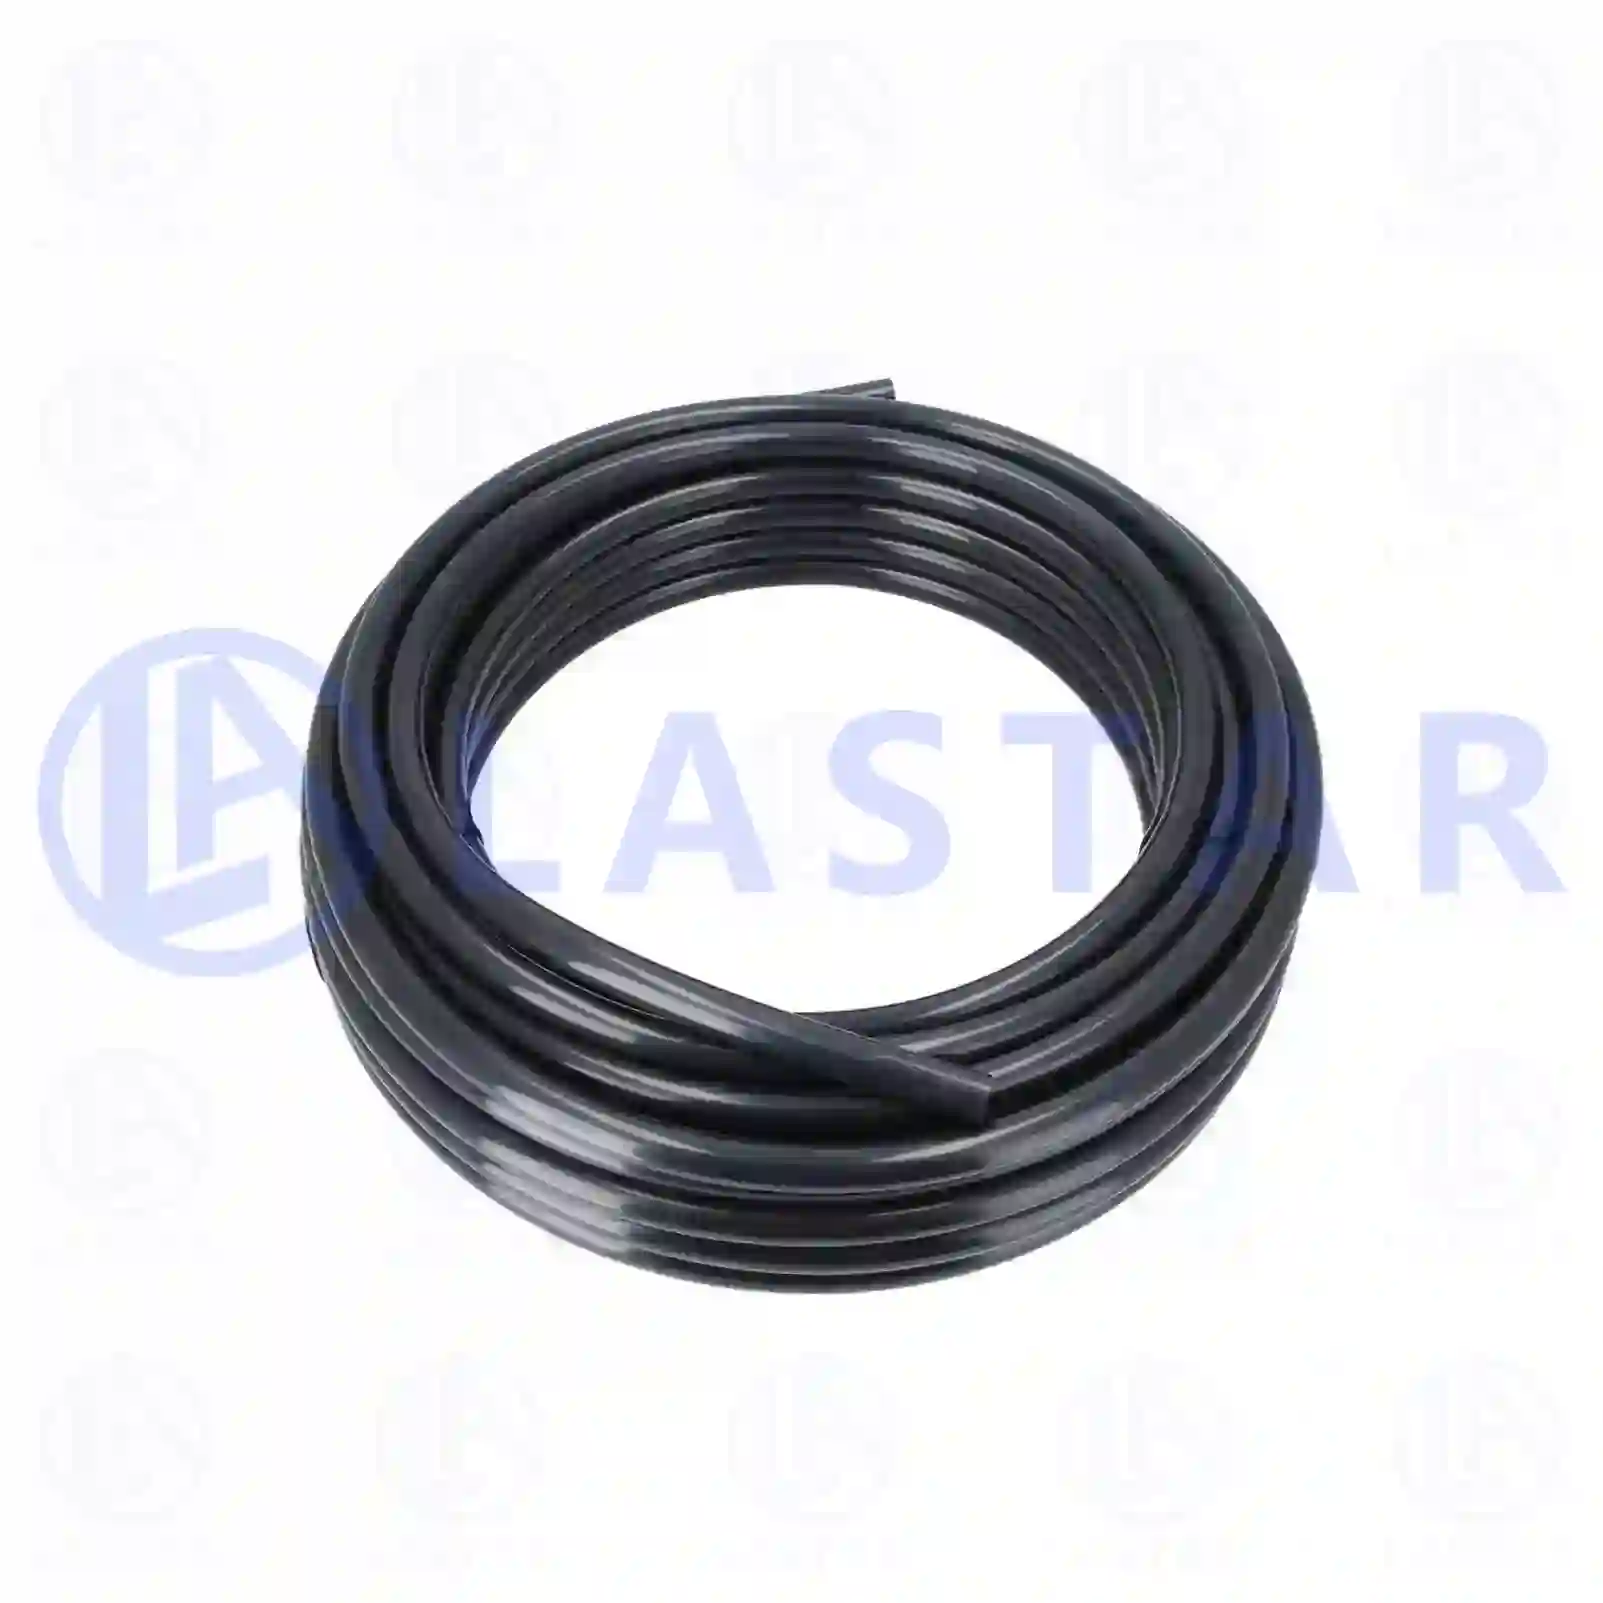  Nylon pipe, black || Lastar Spare Part | Truck Spare Parts, Auotomotive Spare Parts